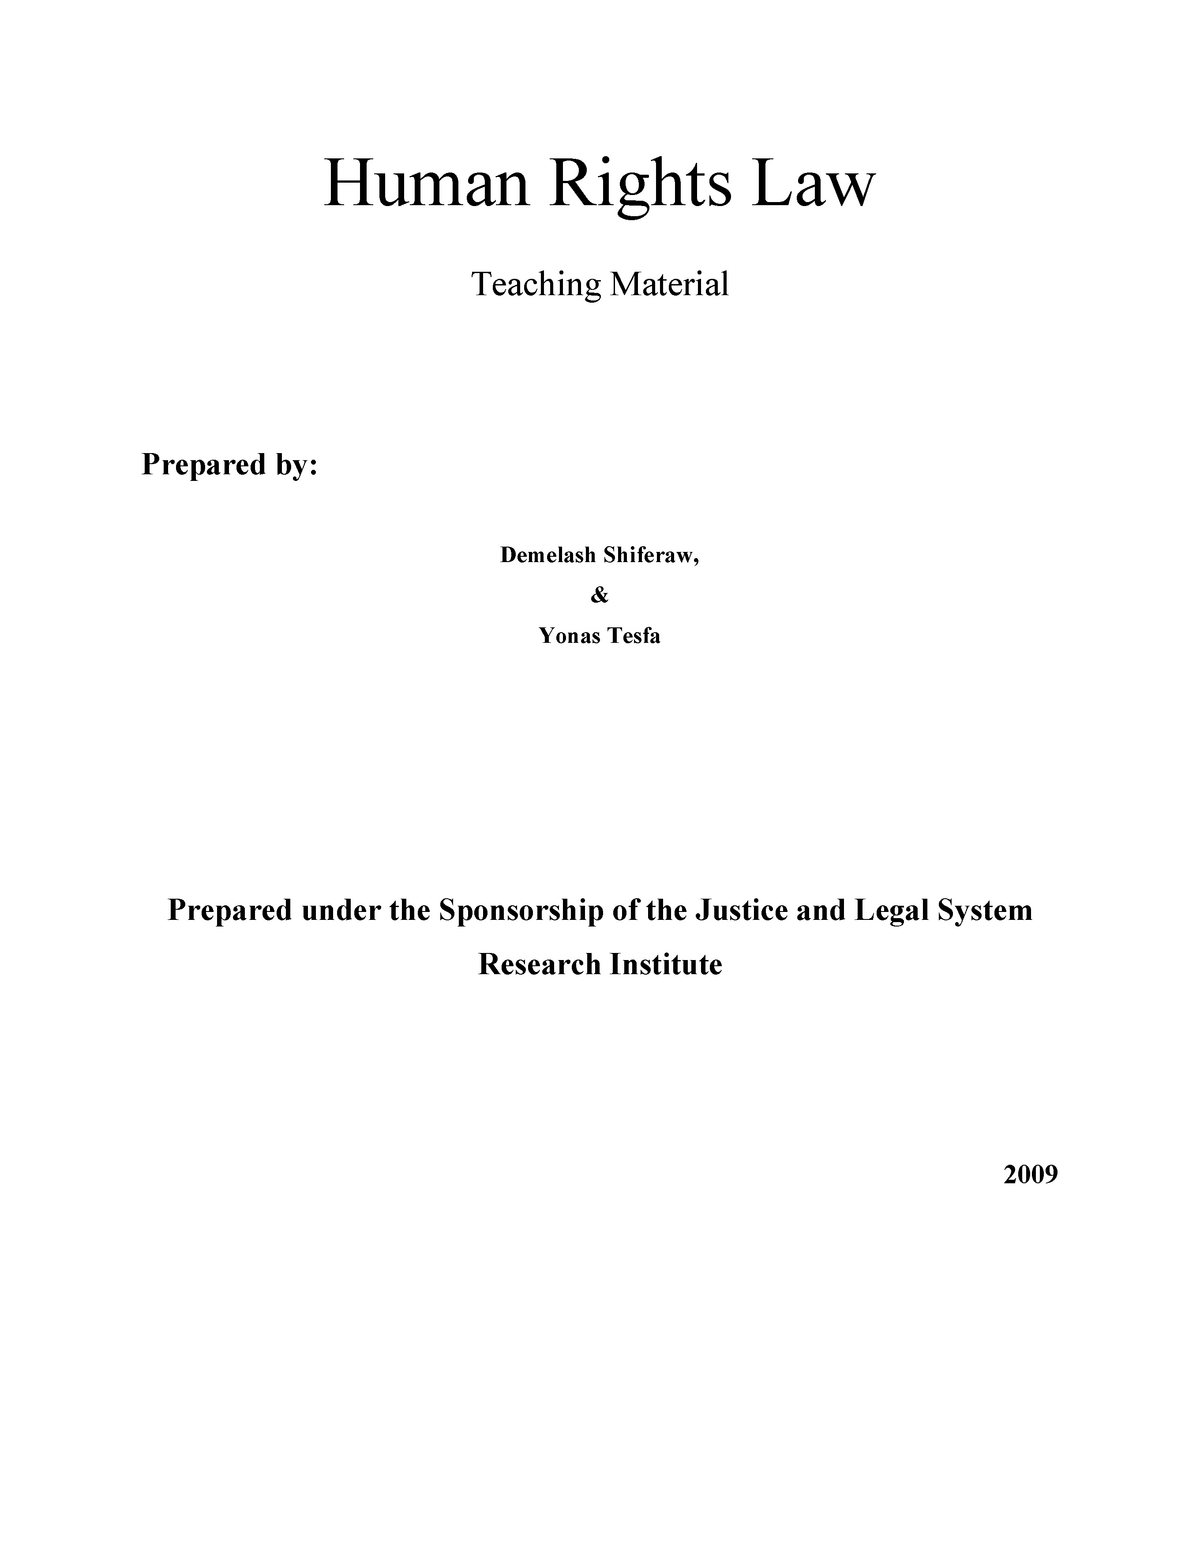 international human rights law dissertation